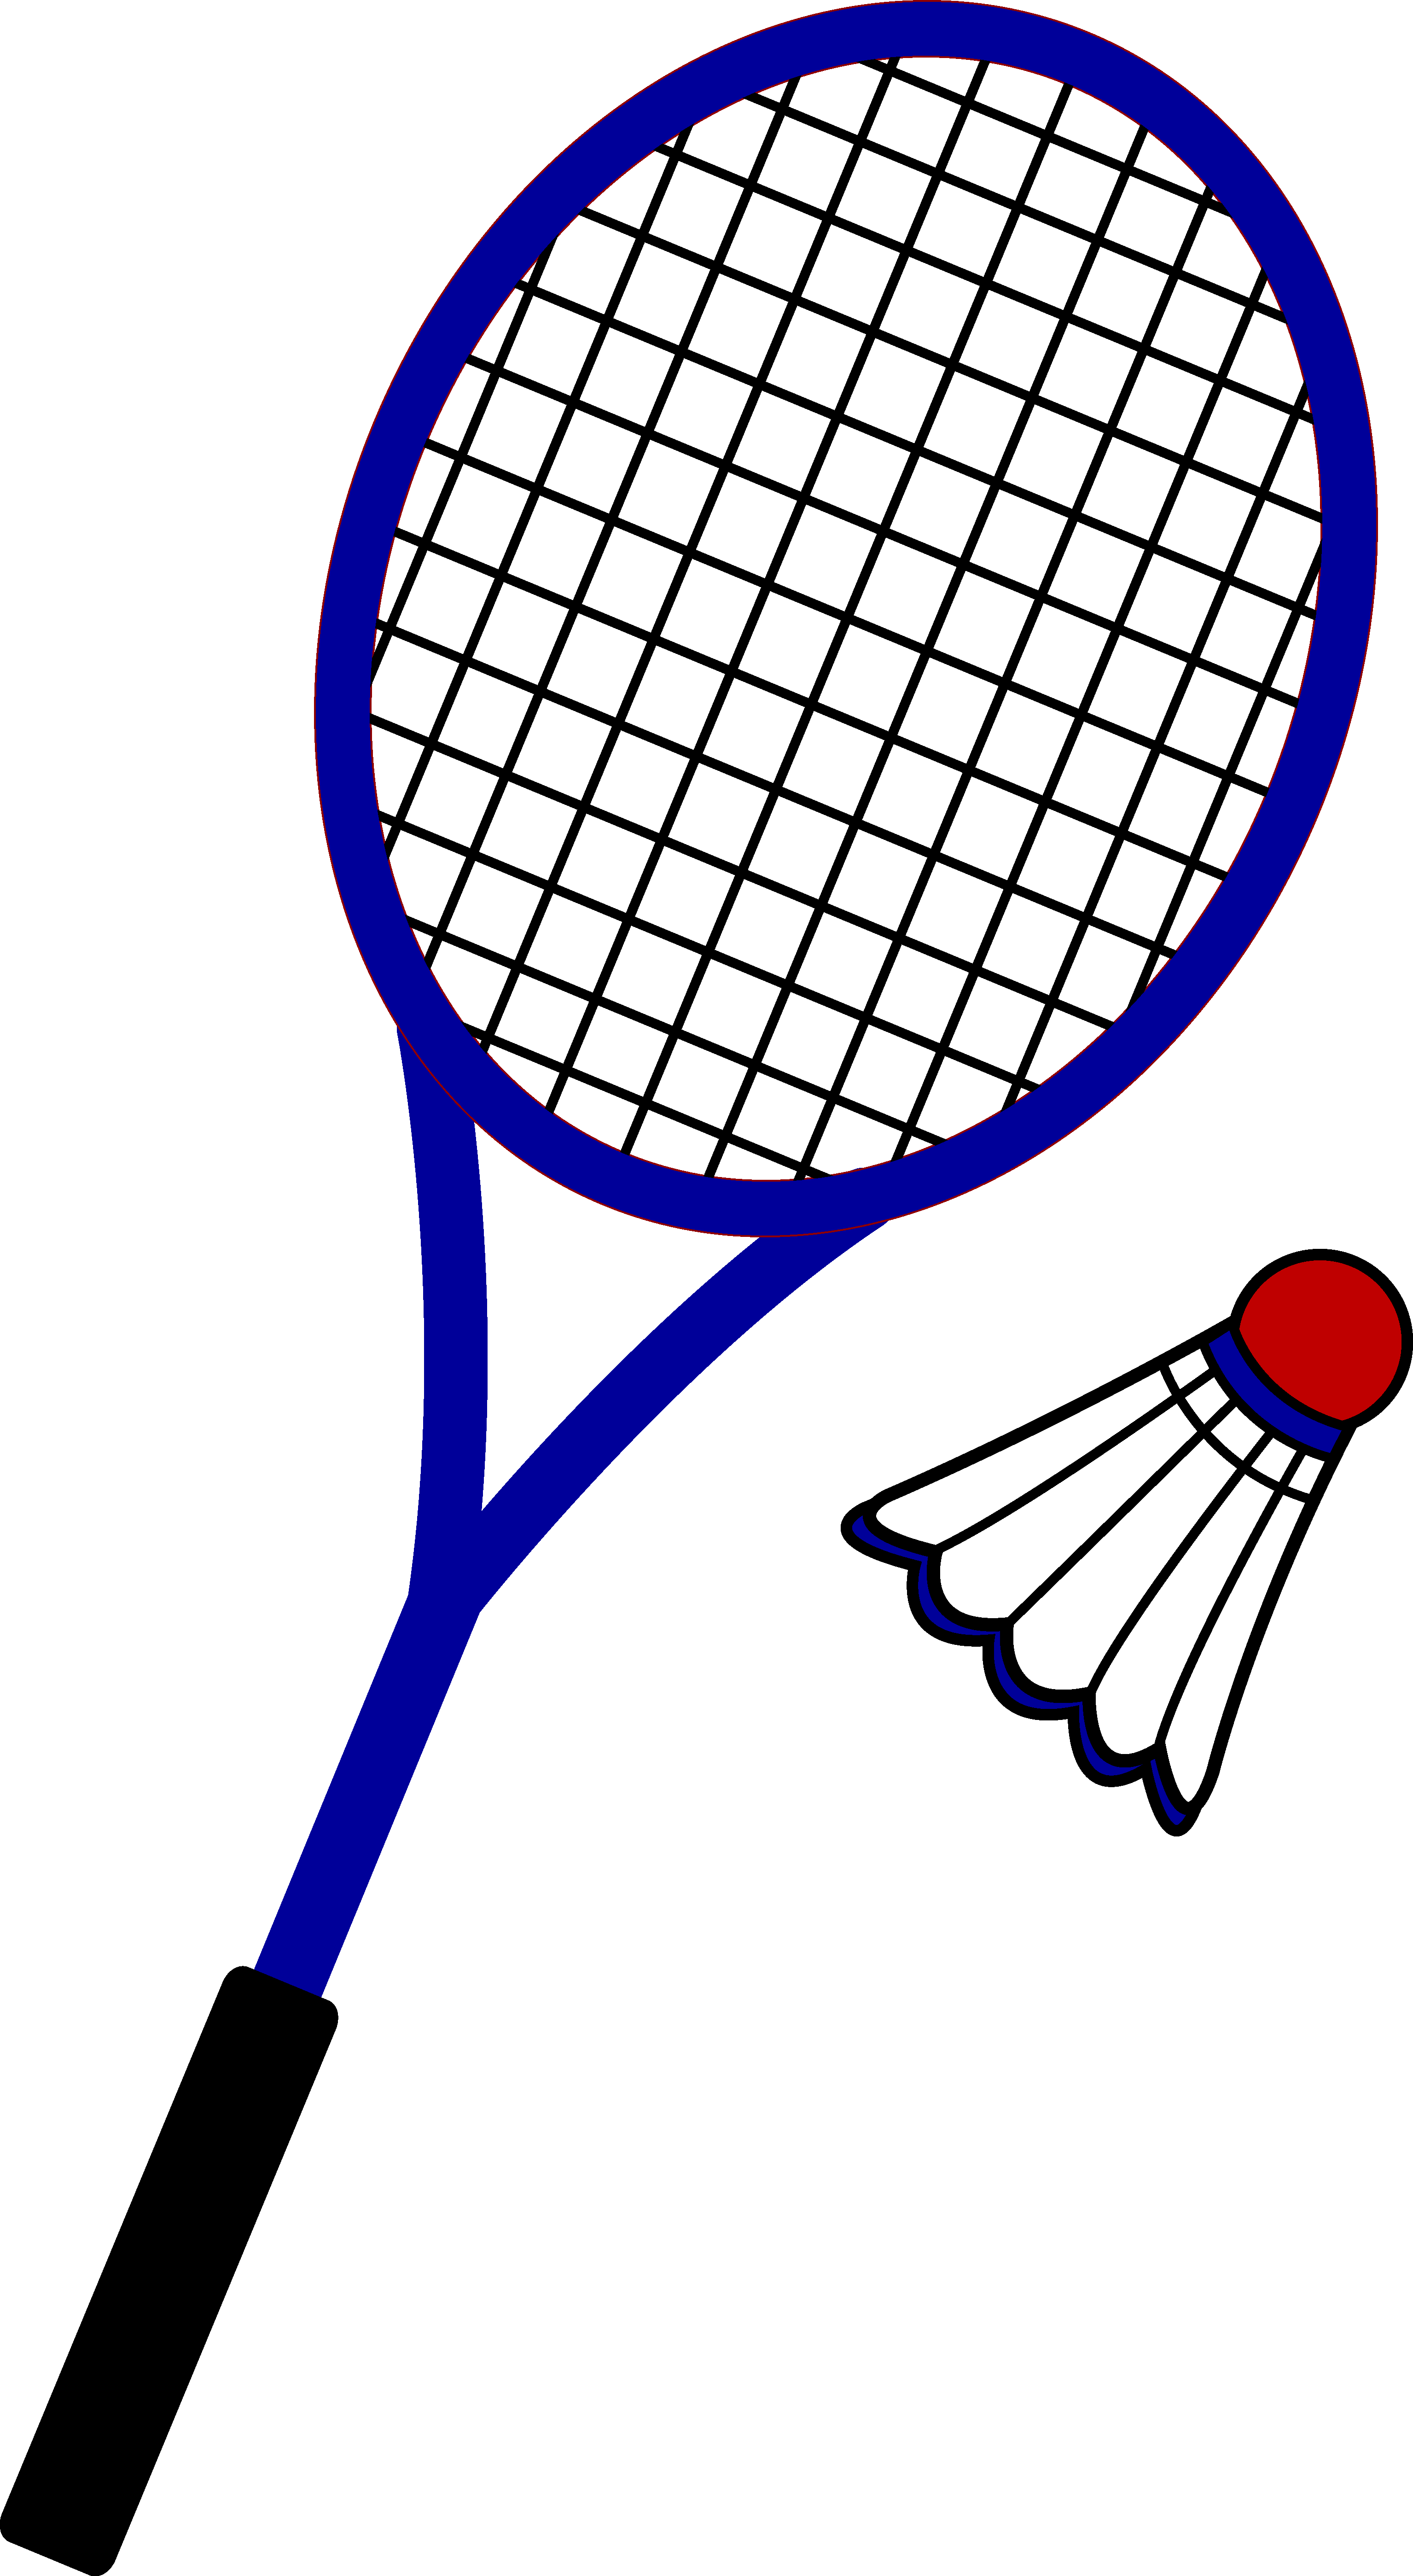 Badminton Silhouette Clip art - badminton png download - 558*545 - Free ...